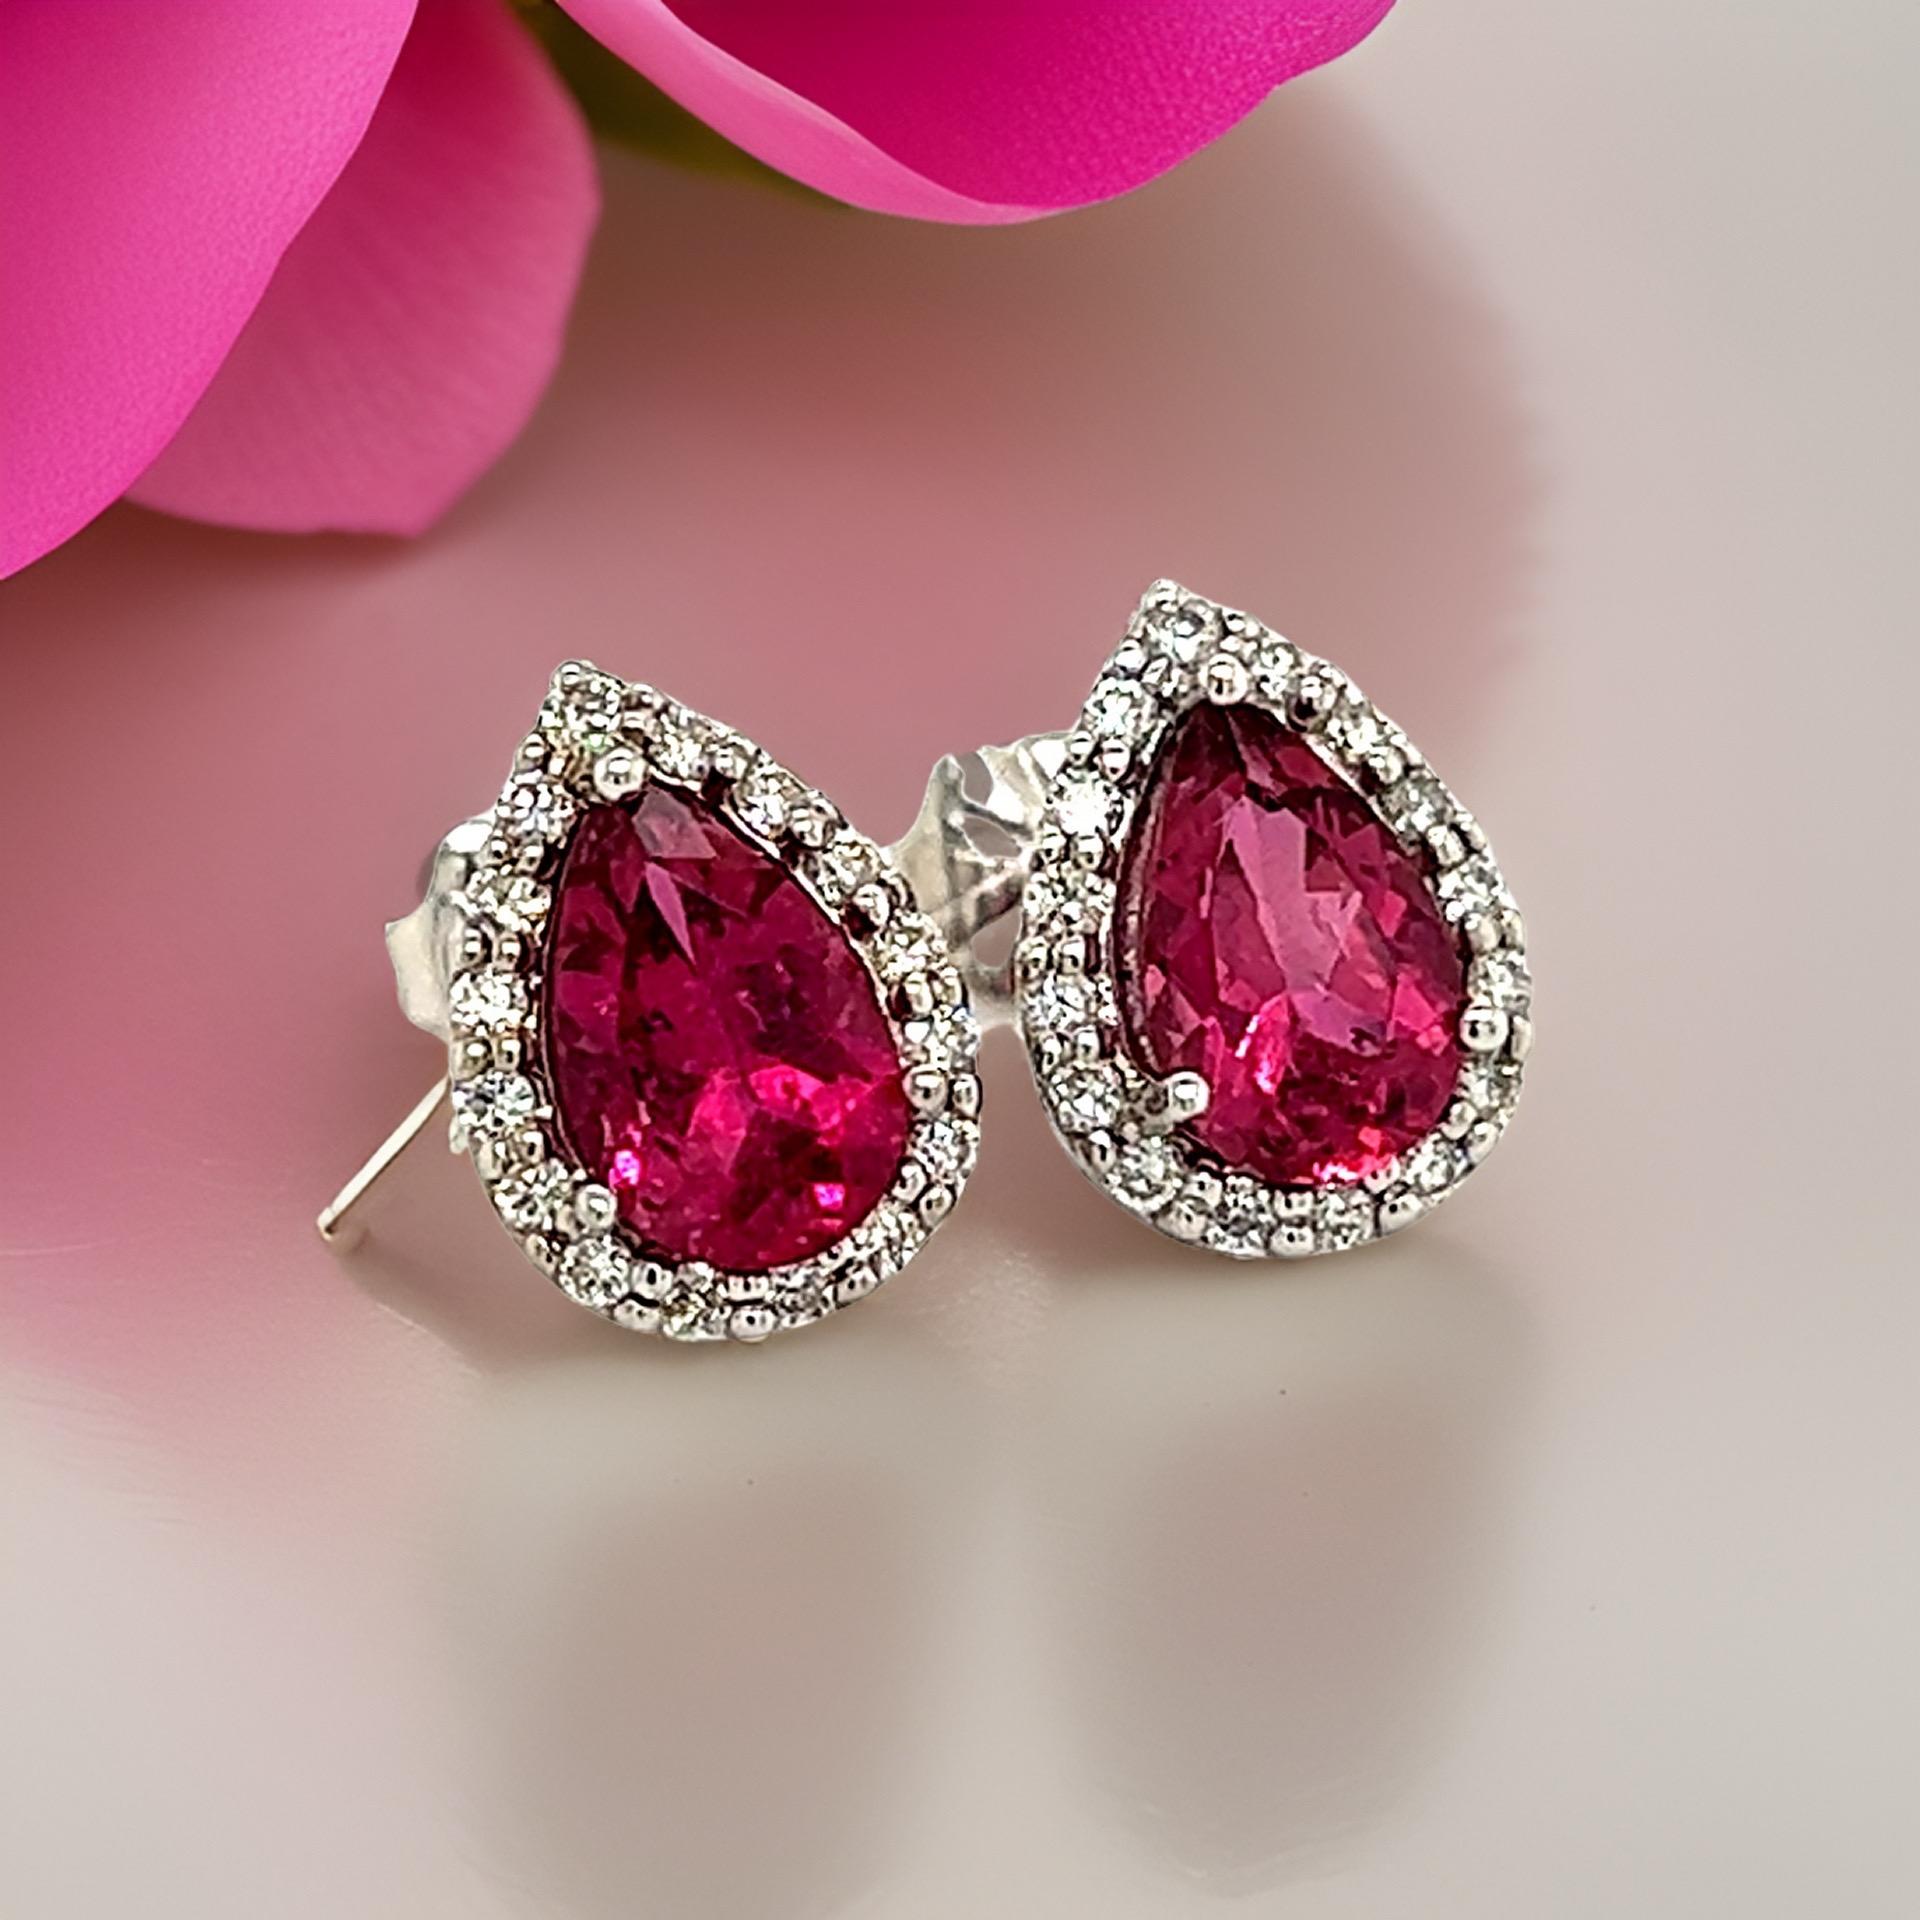 Natural Pink Tourmaline Diamond Stud Earrings 14k W Gold 2.02 TCW Certified For Sale 3